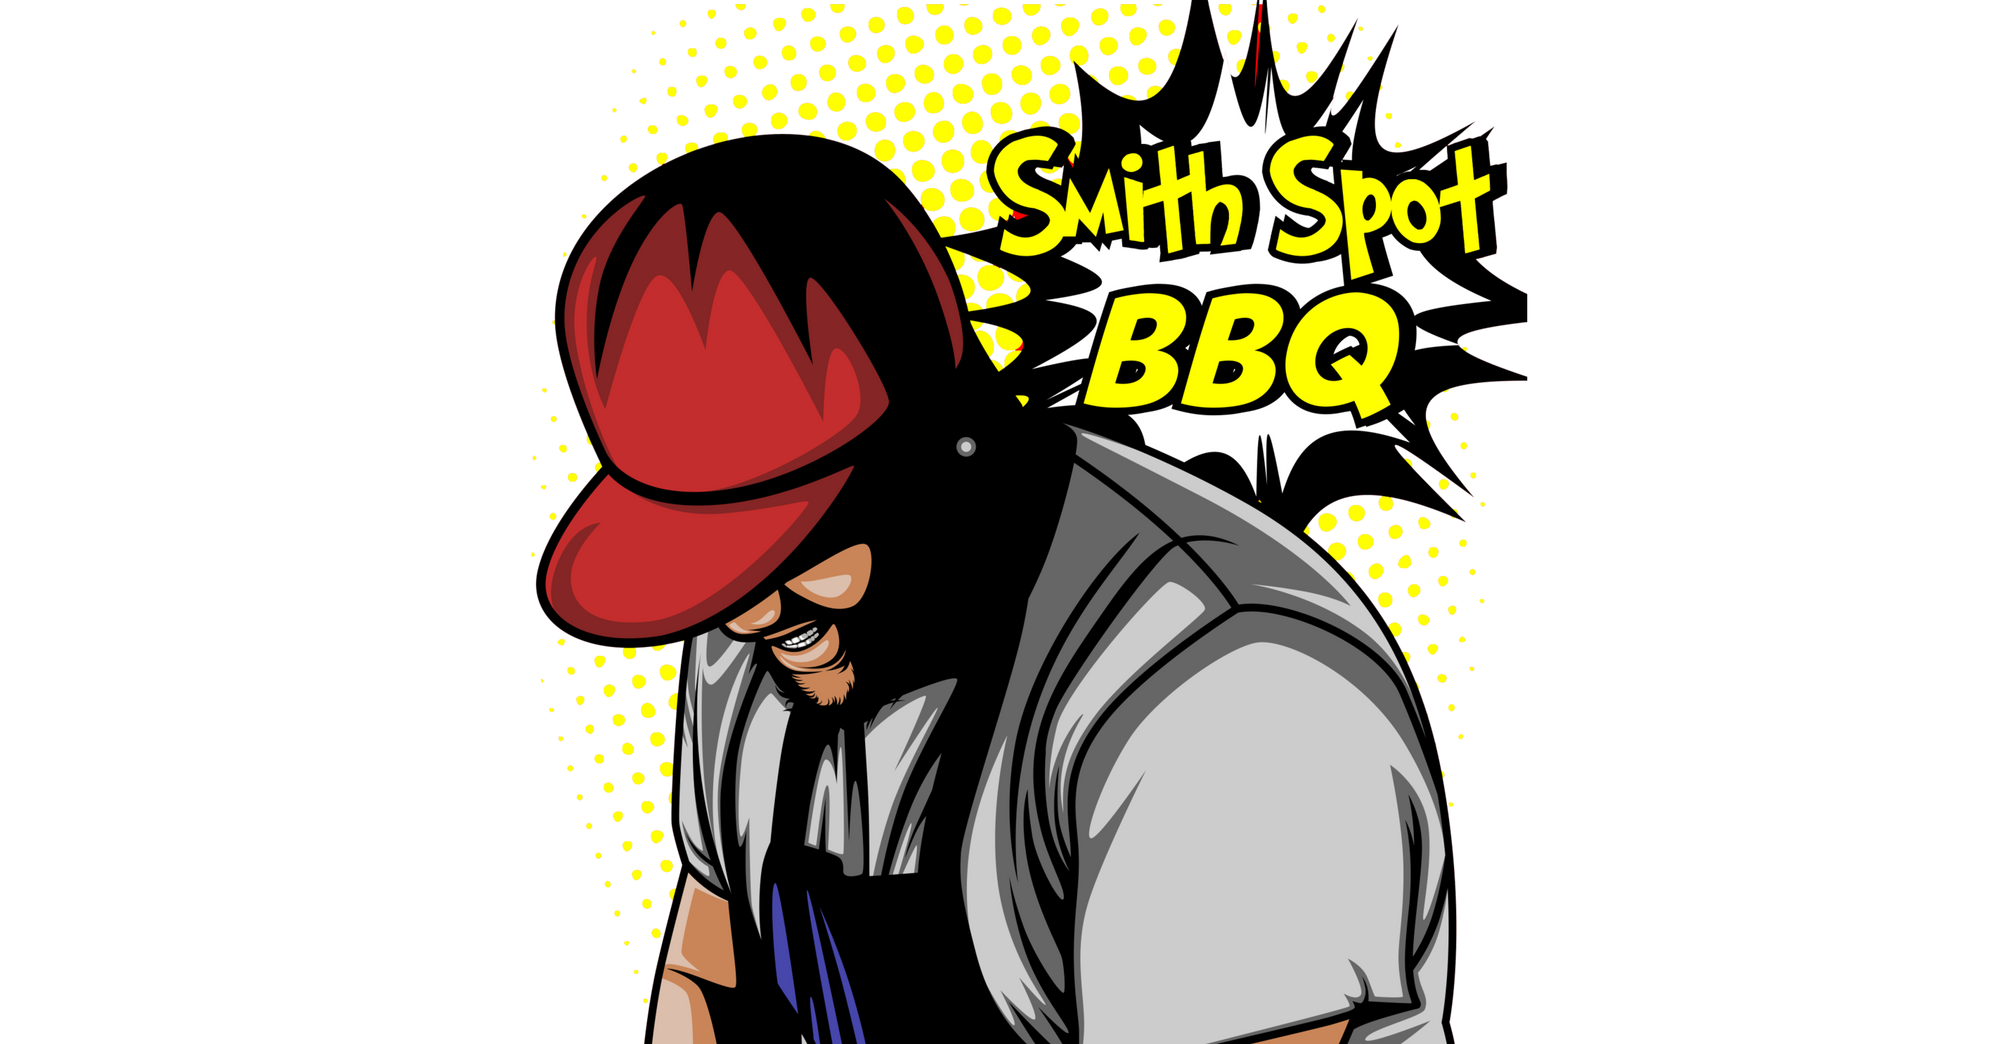 Downright Good Ole BBQ! - Smith Spot BBQ